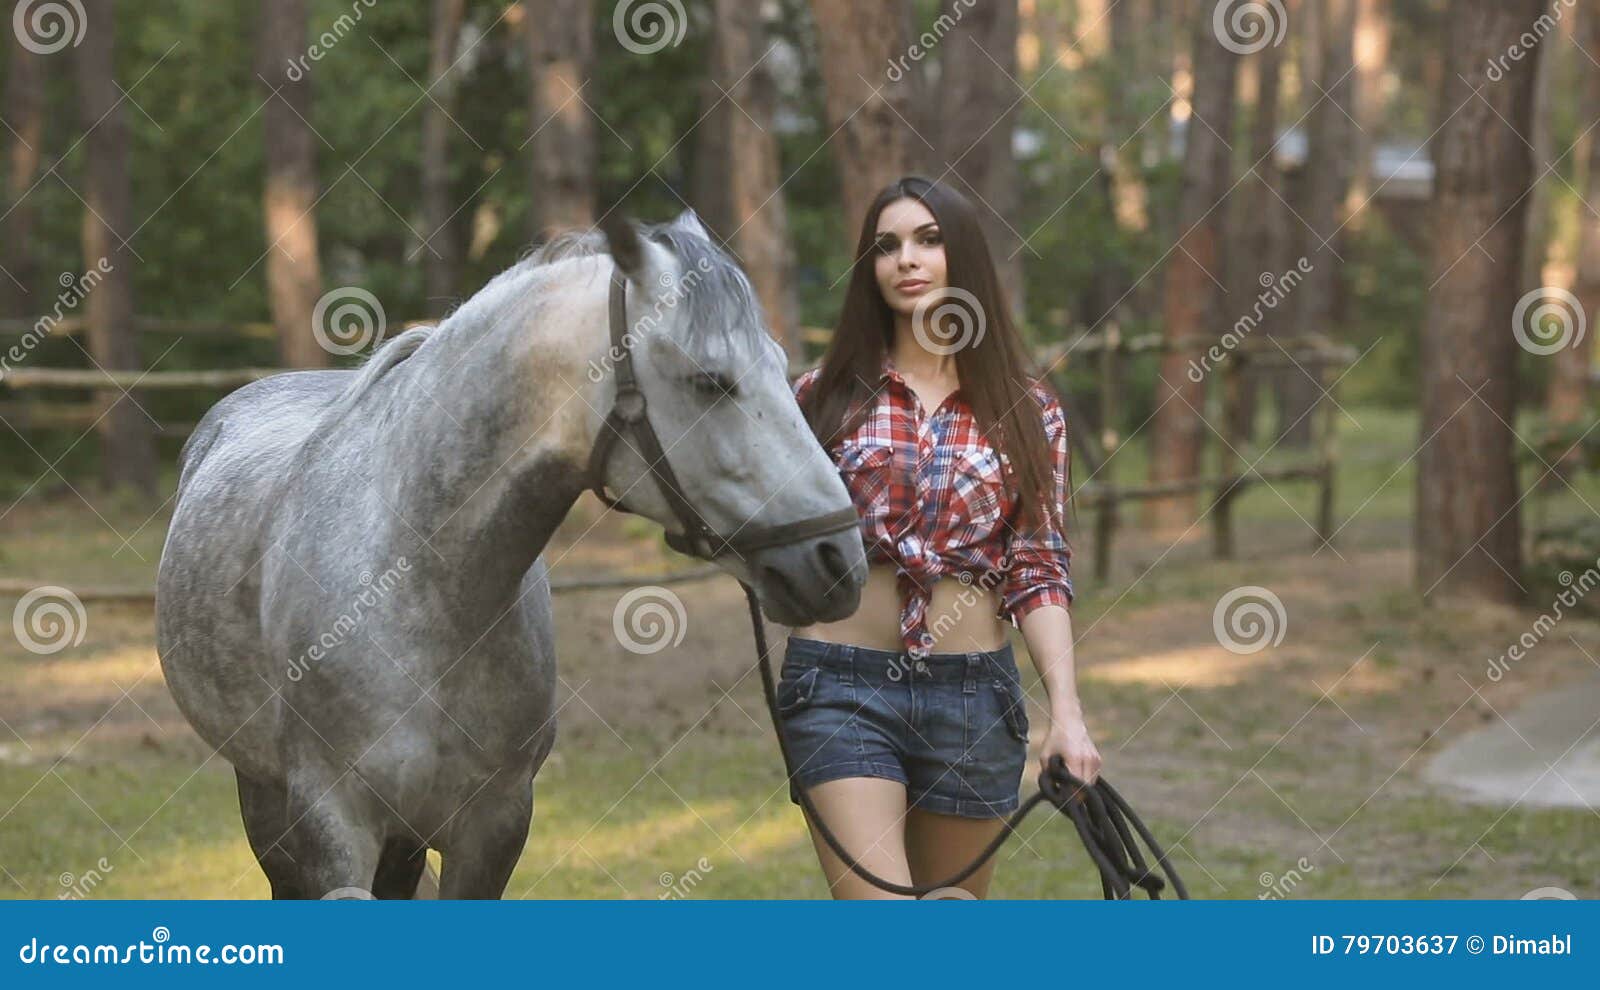 Horse girl sexy video hd